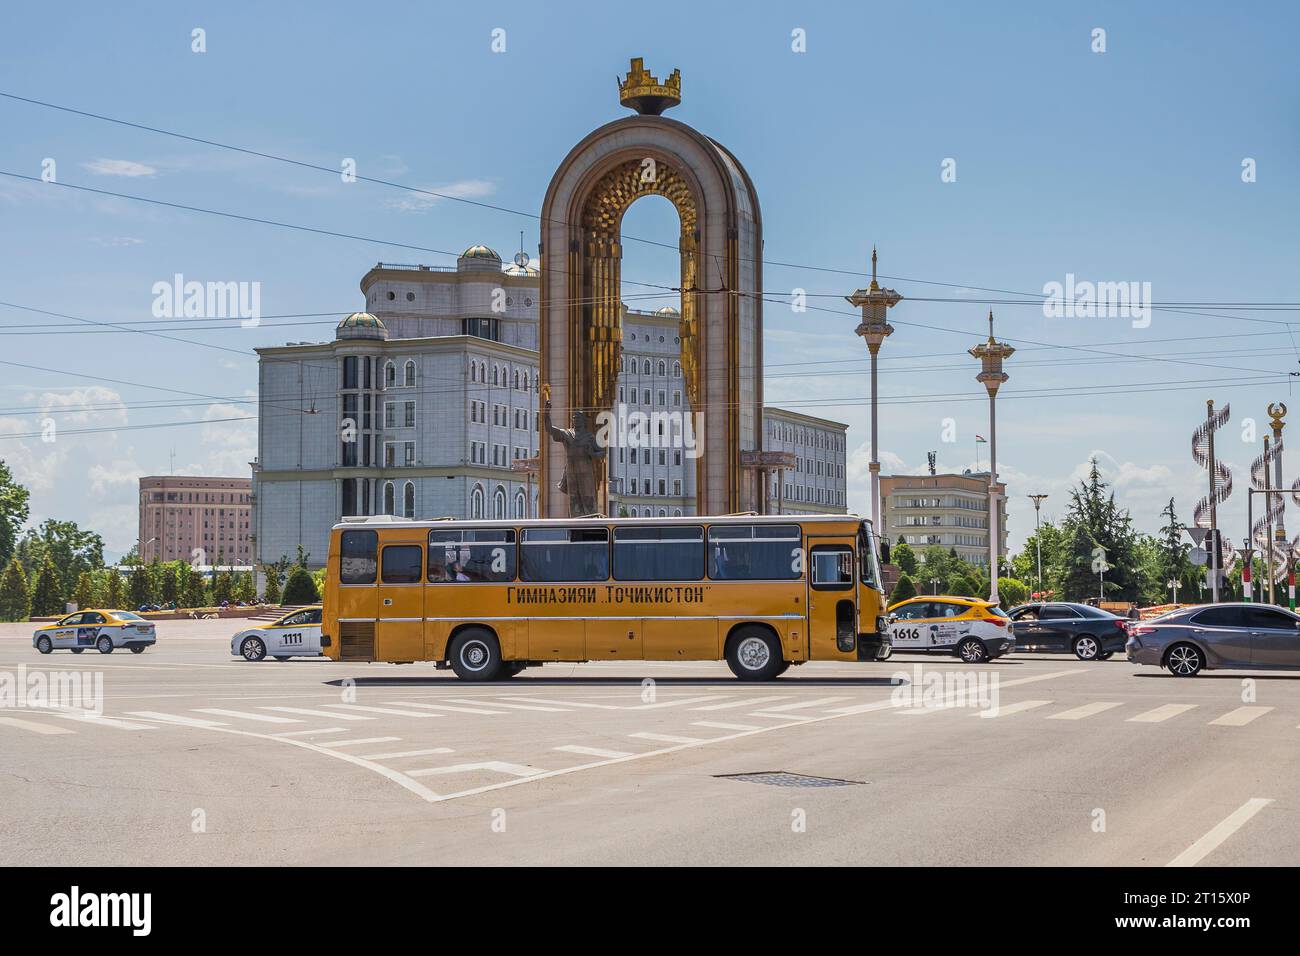 5.05.2022. Tajikistan, Dushanbe. The one and only Ikarus in the capital city of Tajikistan belongs to Tajikistan High School. Stock Photo